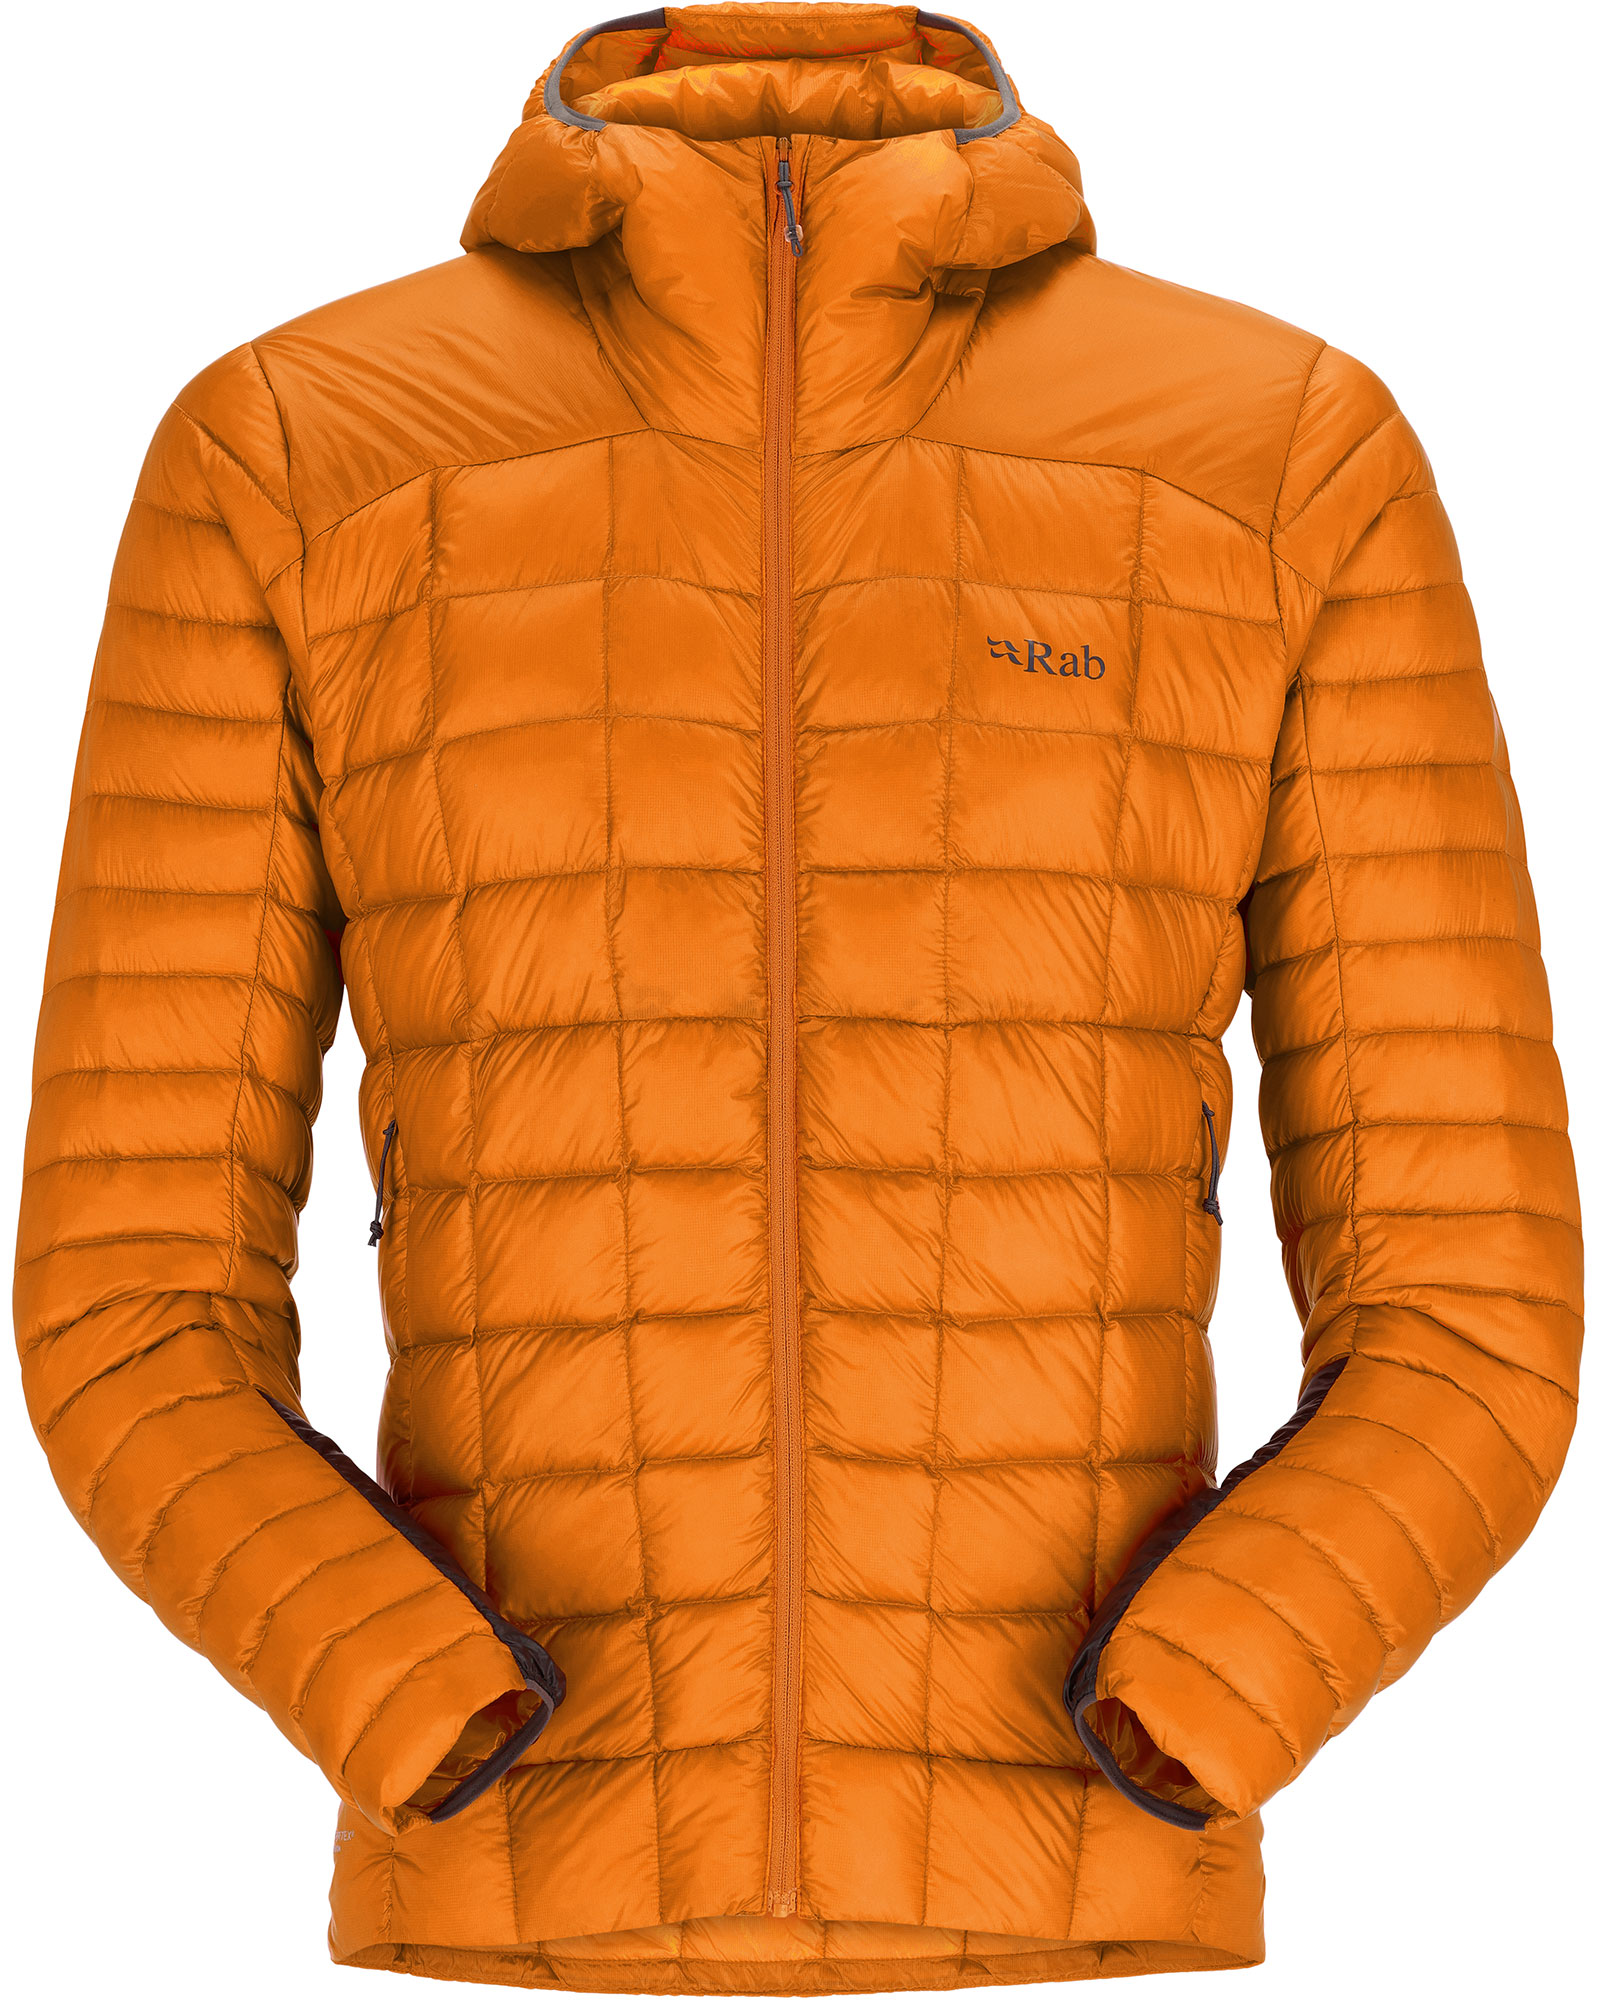 Rab Mythic Alpine Light Men’s Down Jacket - Marmalade XL